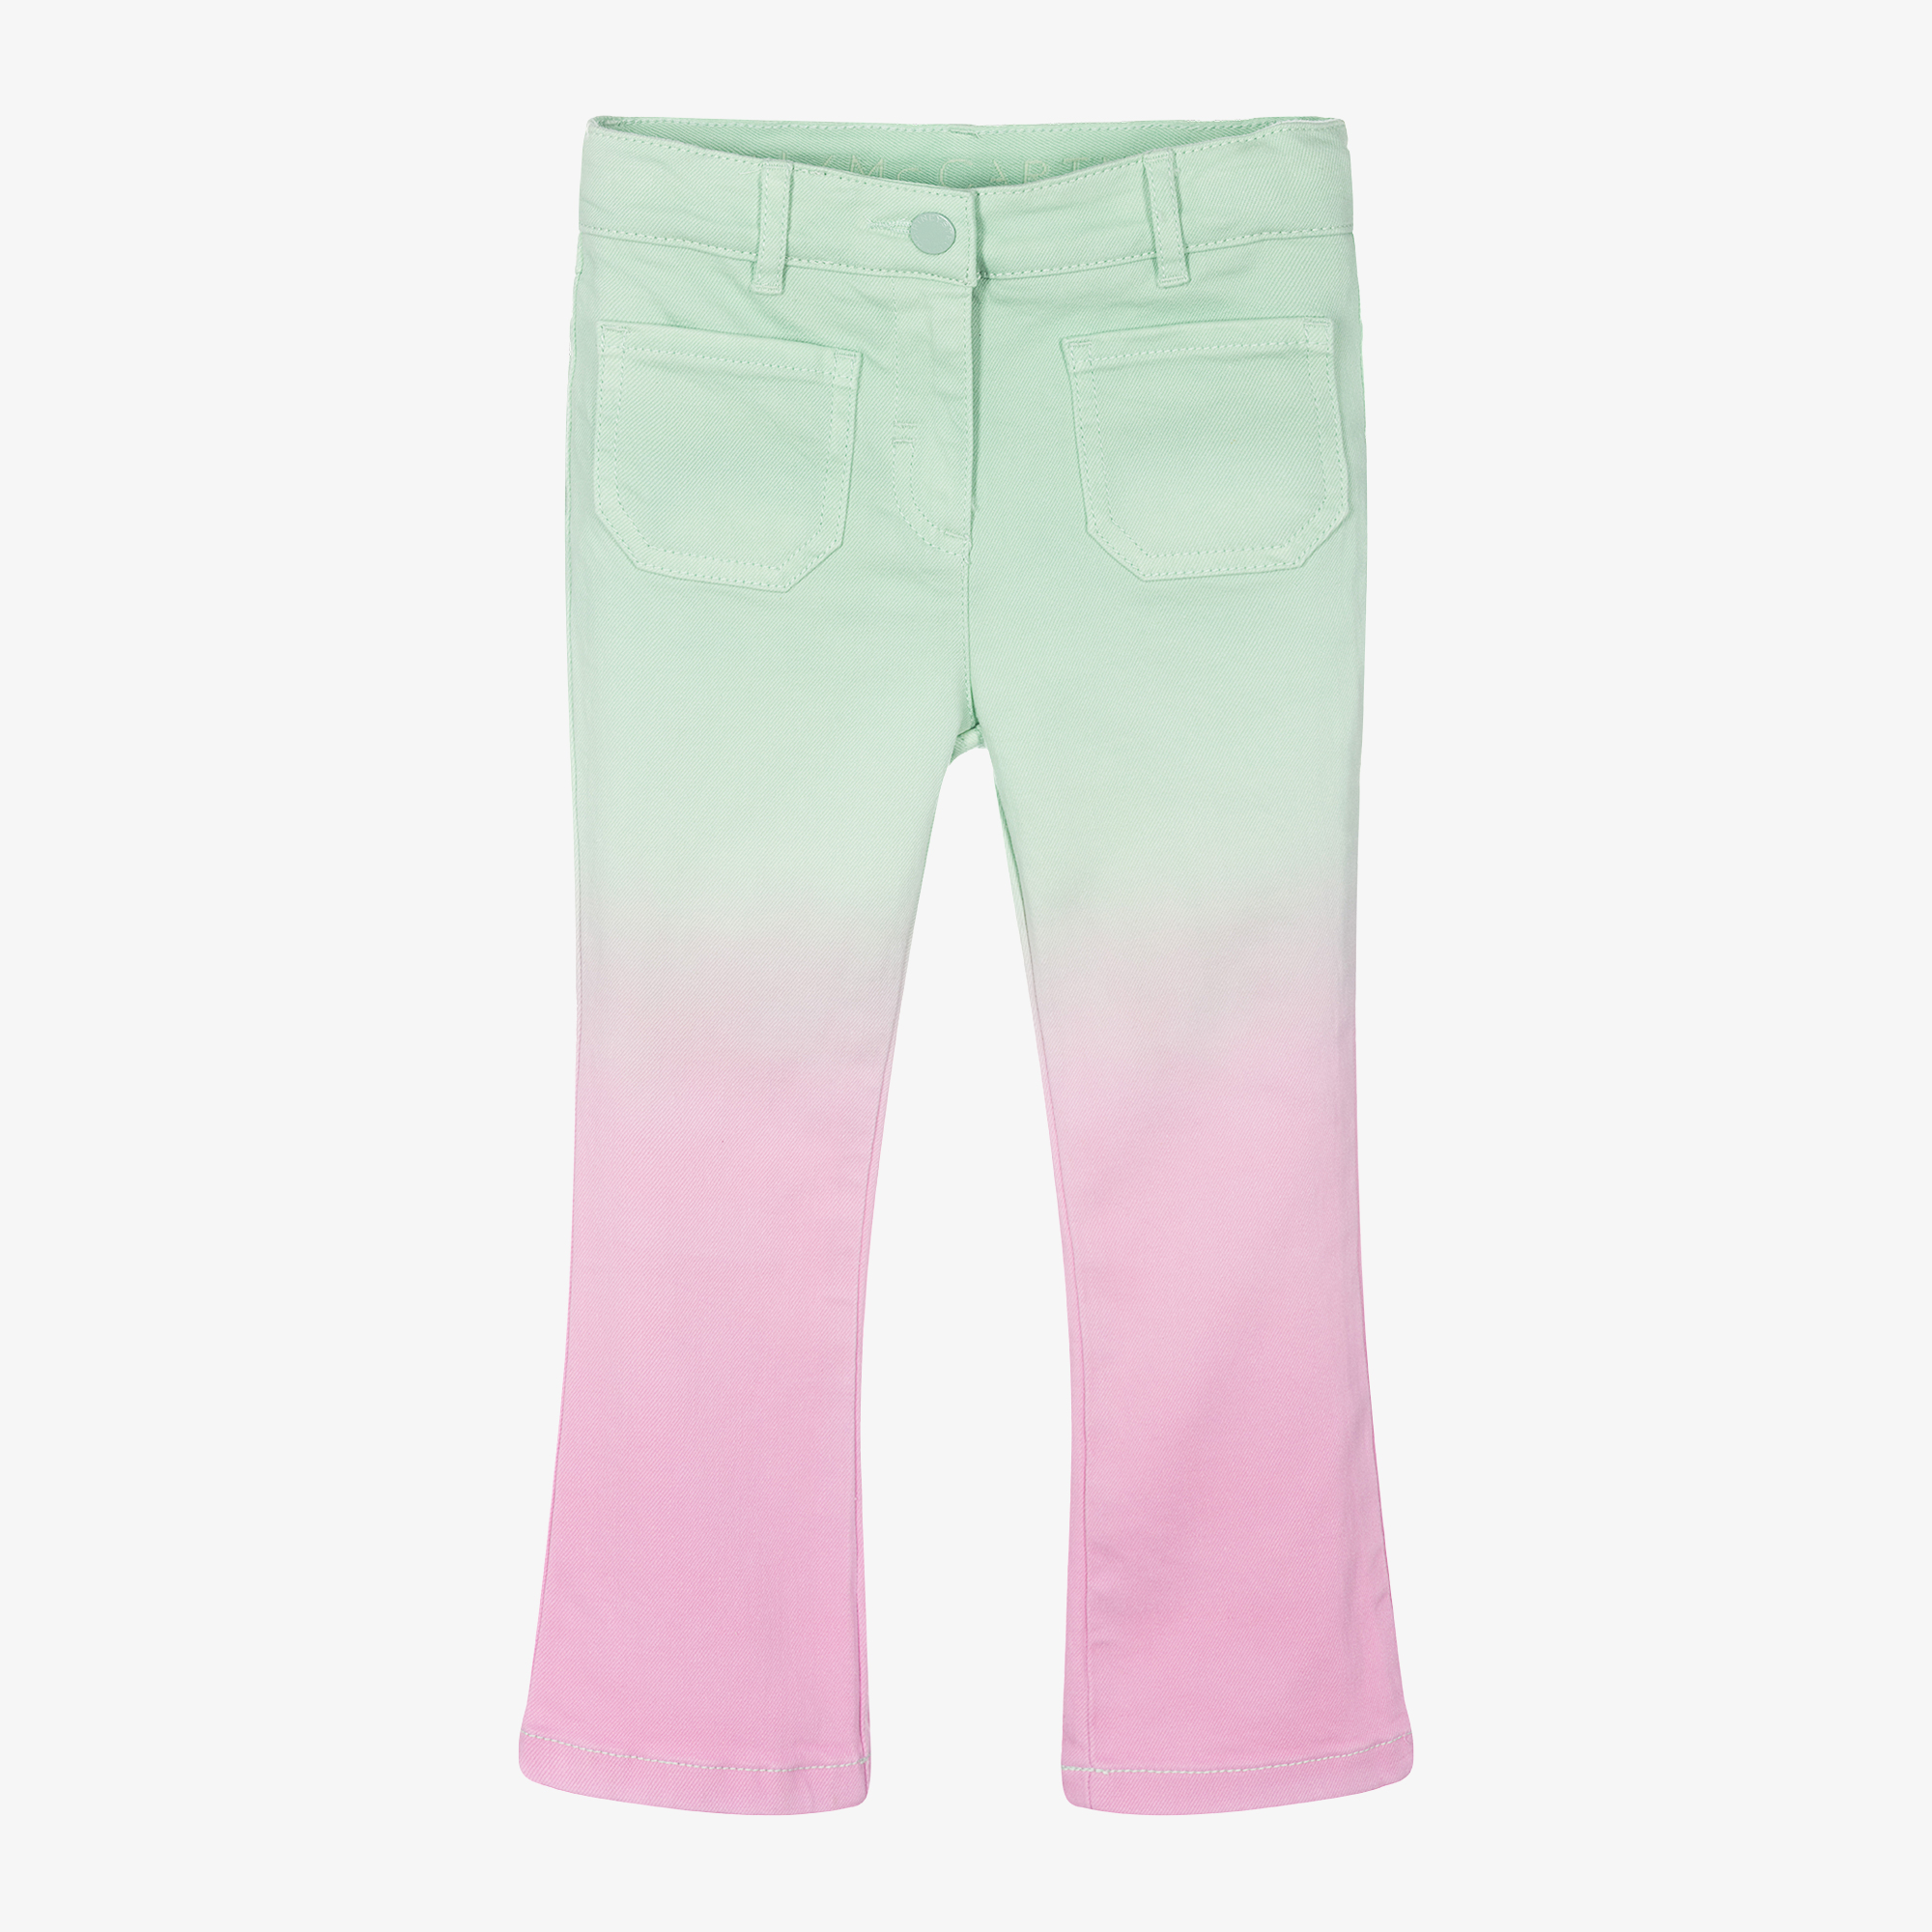 Stella McCartney Kids Girls Green & Pink Ombré Flared Jeans